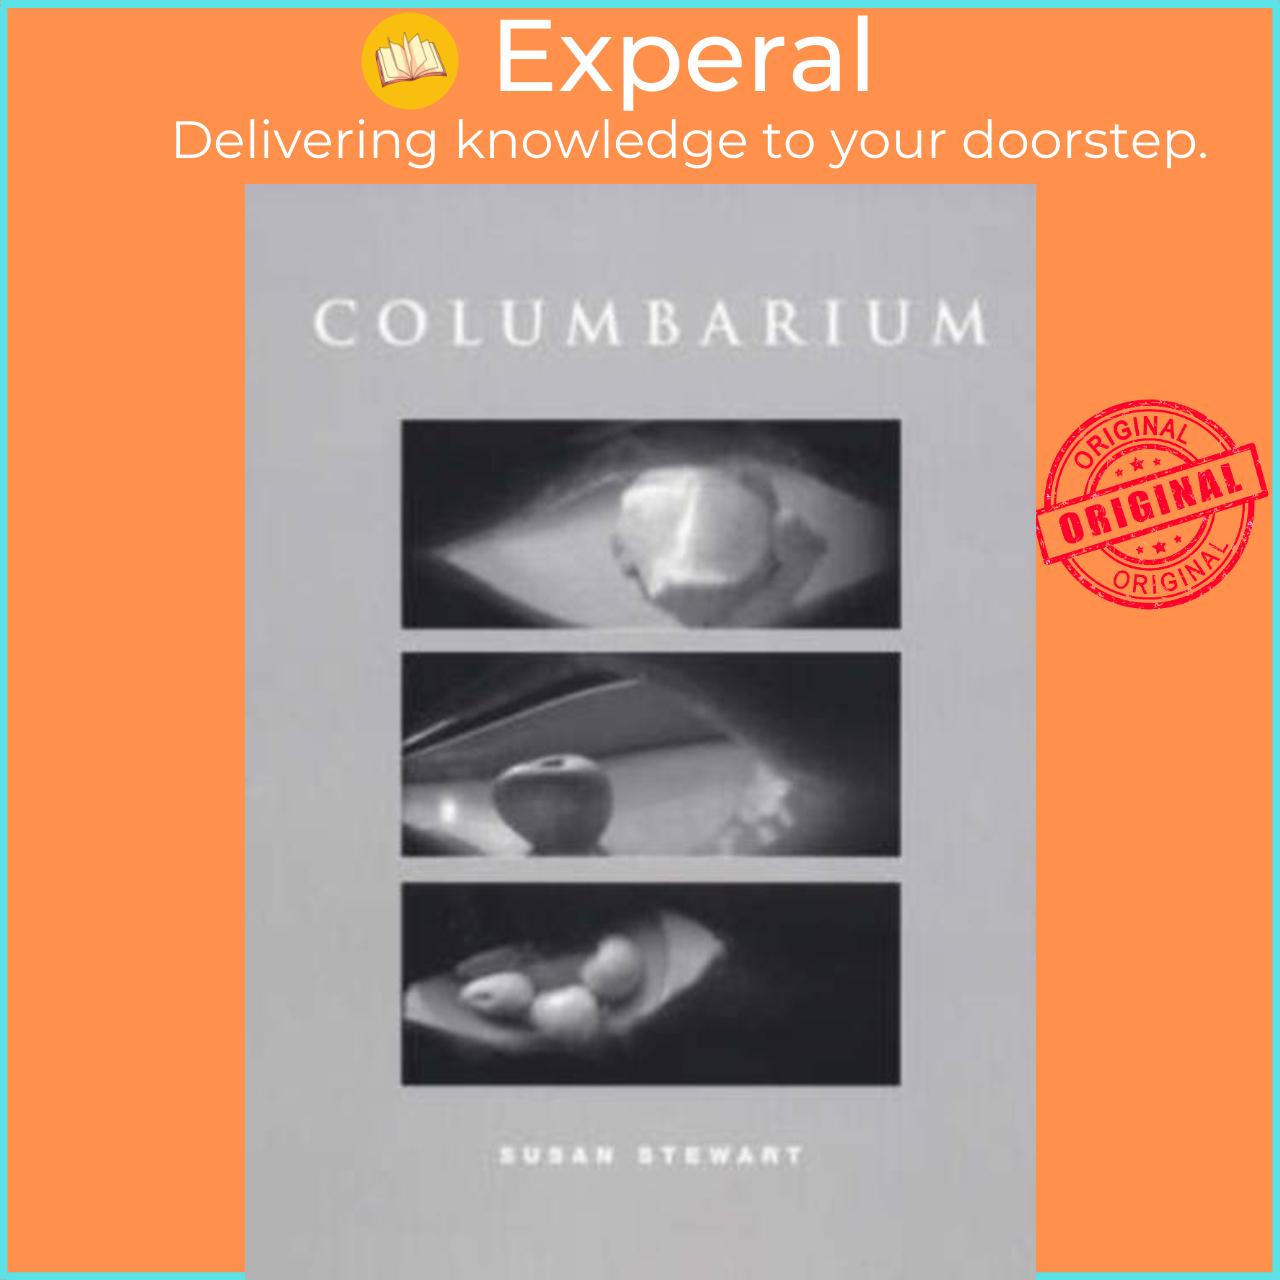 Sách - Columbarium by Susan Stewart (UK edition, paperback)